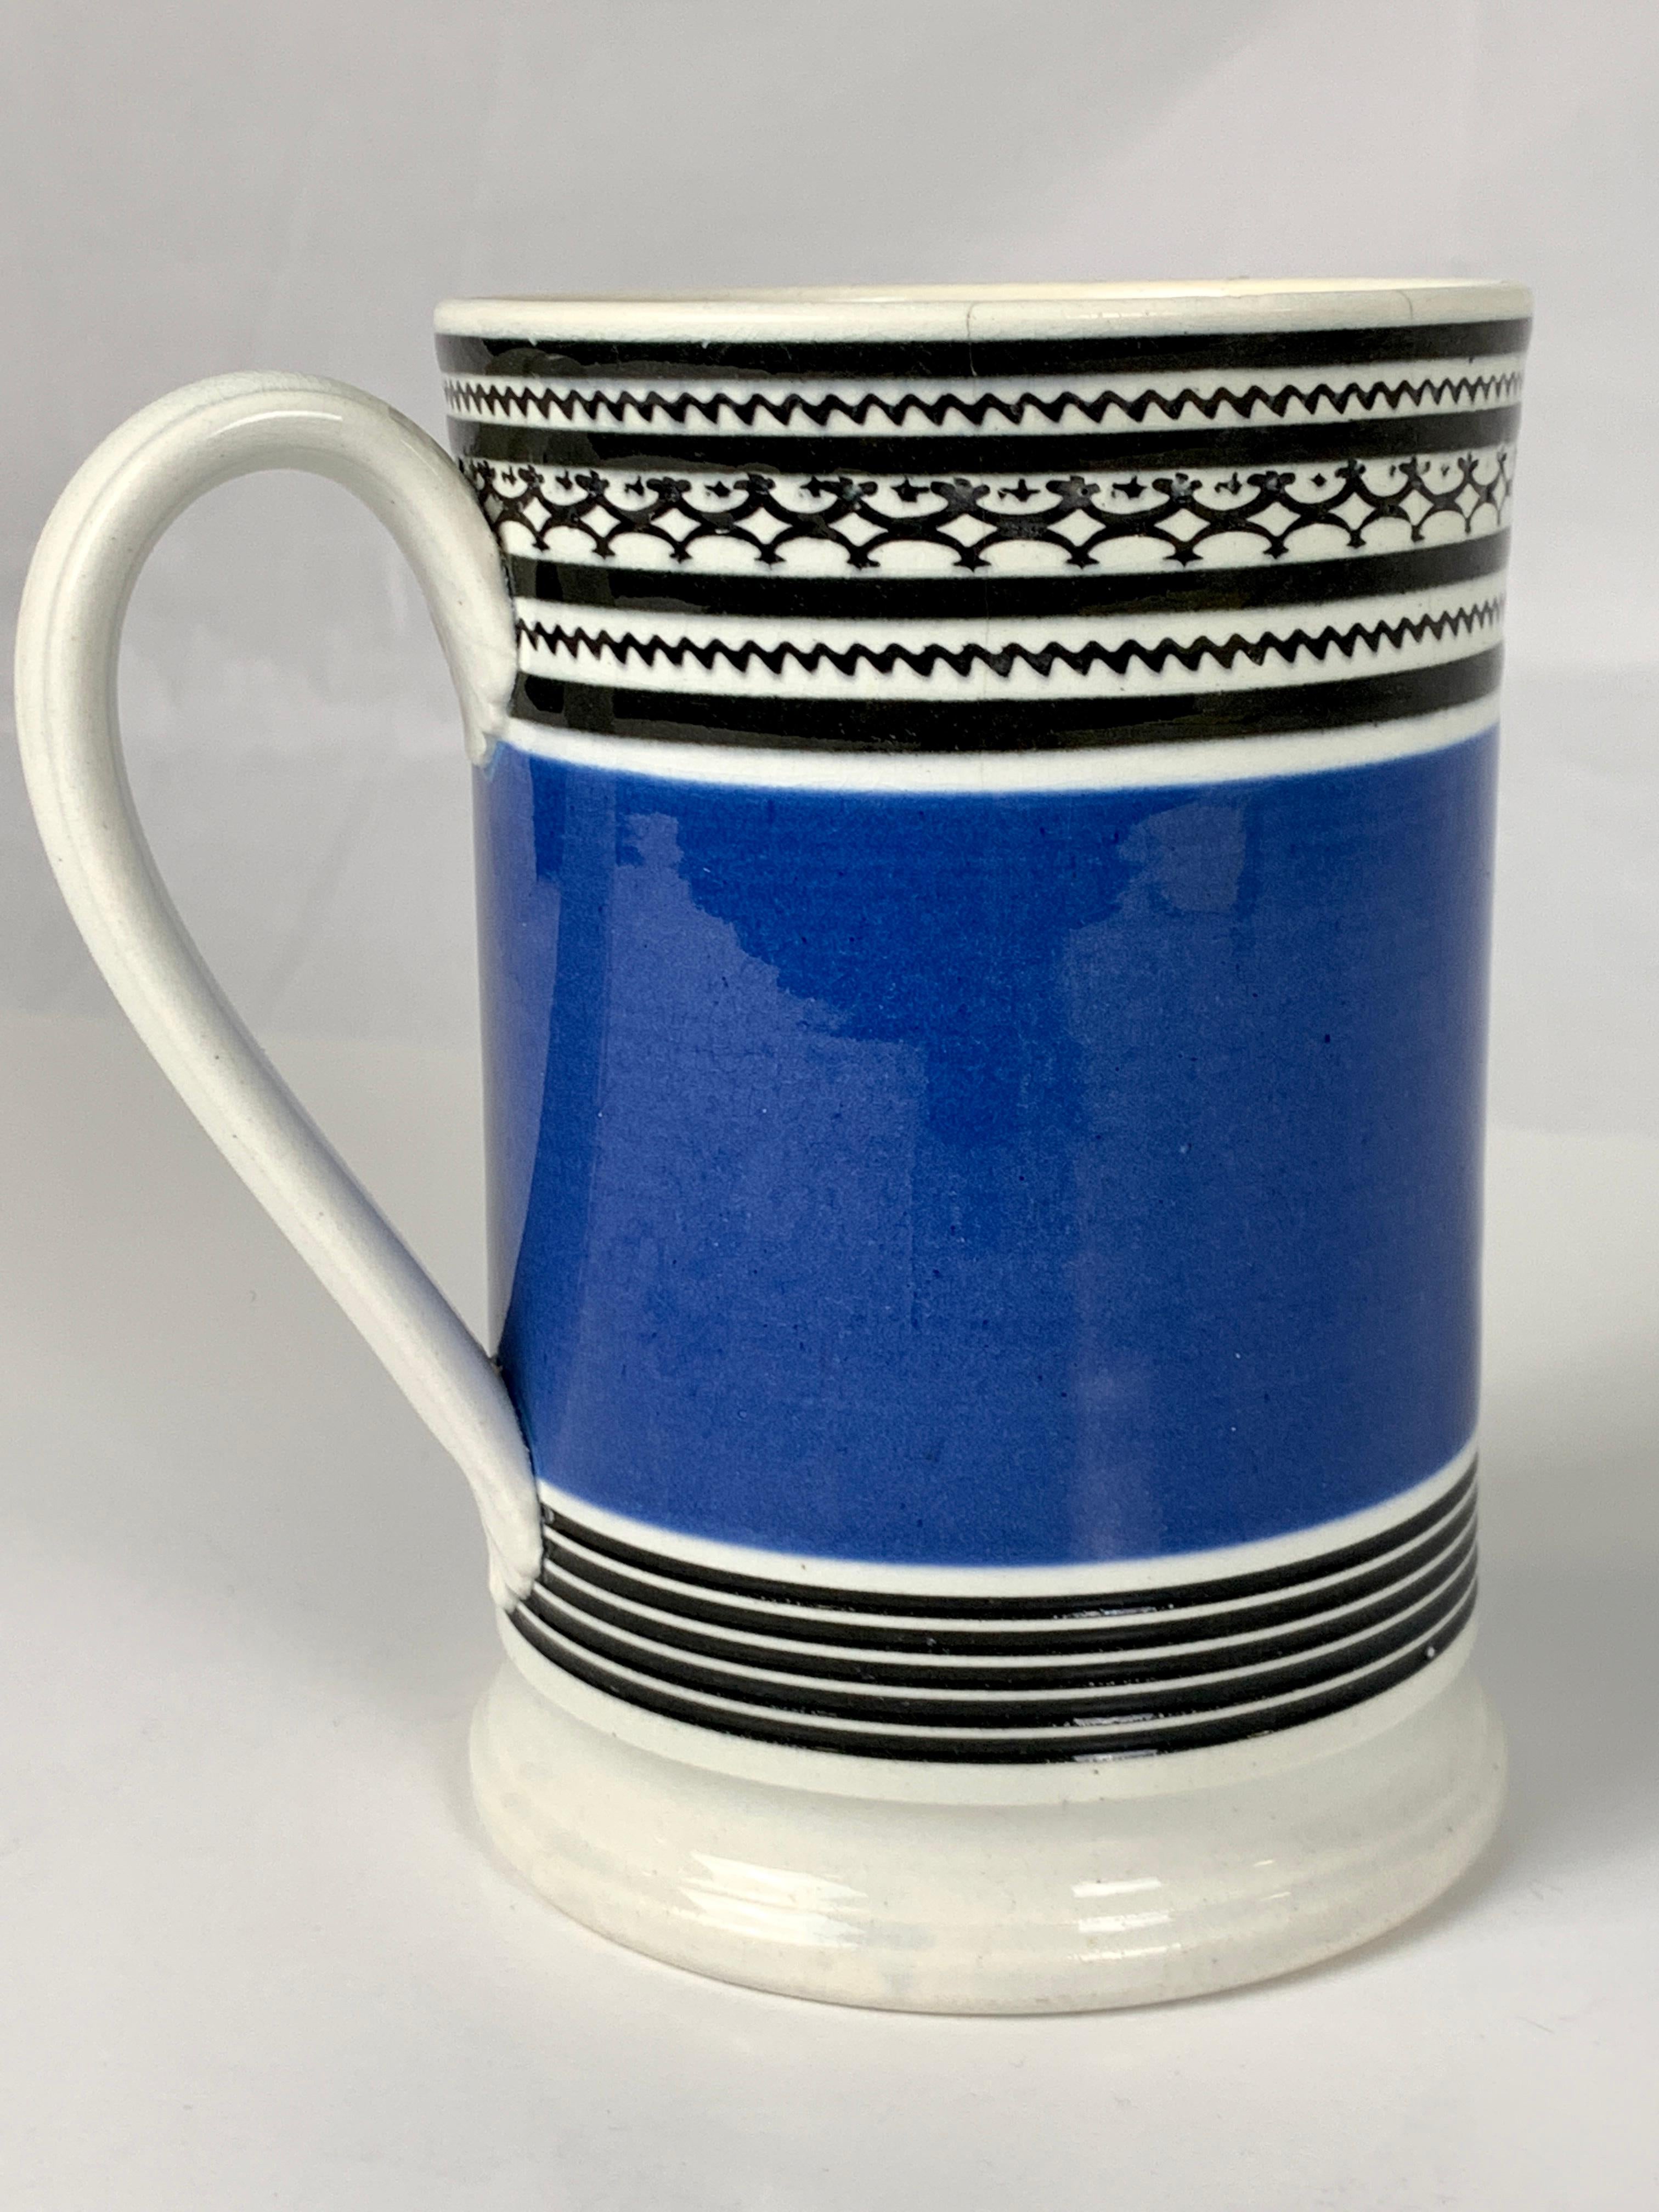 Mochaware Mug with Royal Blue Slip and Black Geometric Designs Made England 1